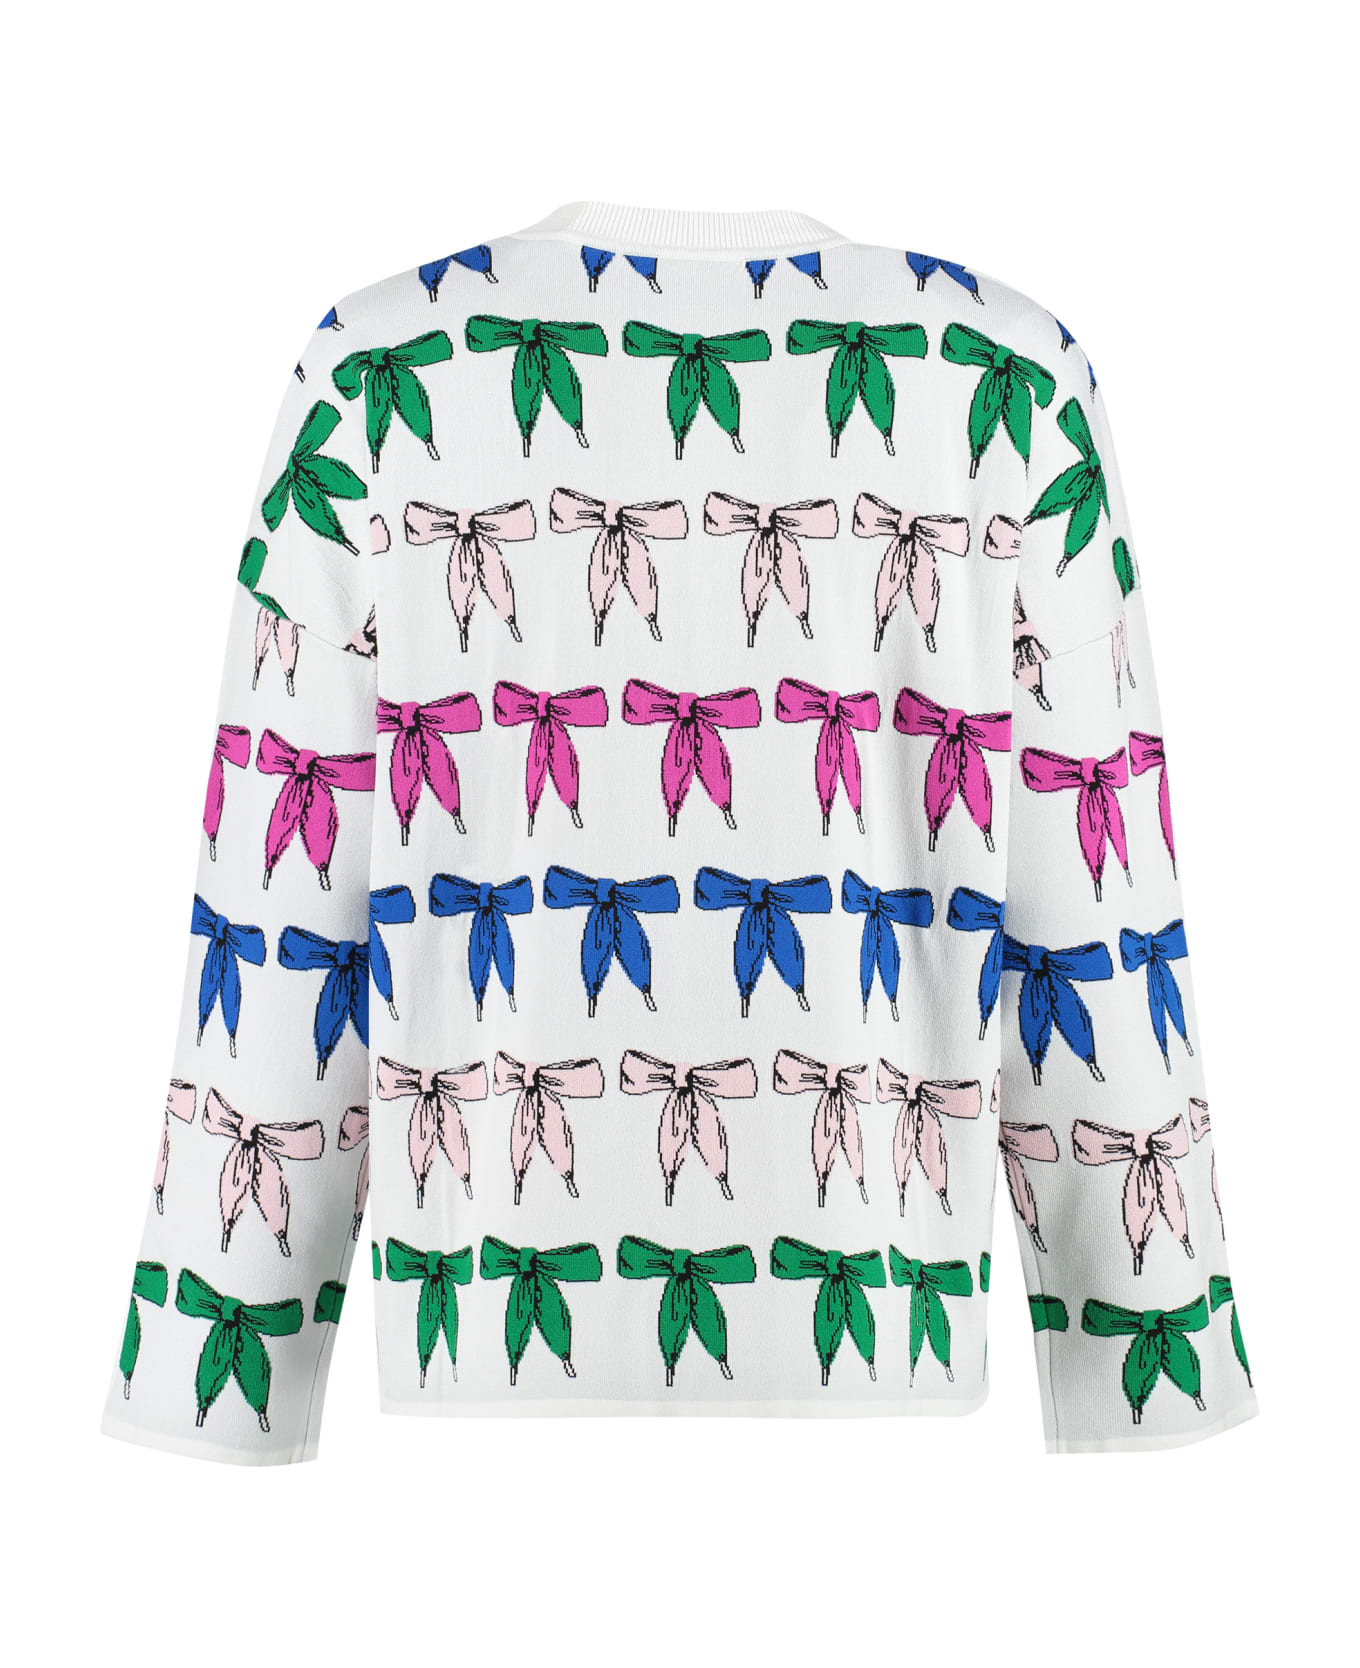 Boutique Moschino Jacquard Crew-neck Sweater - White ニットウェア